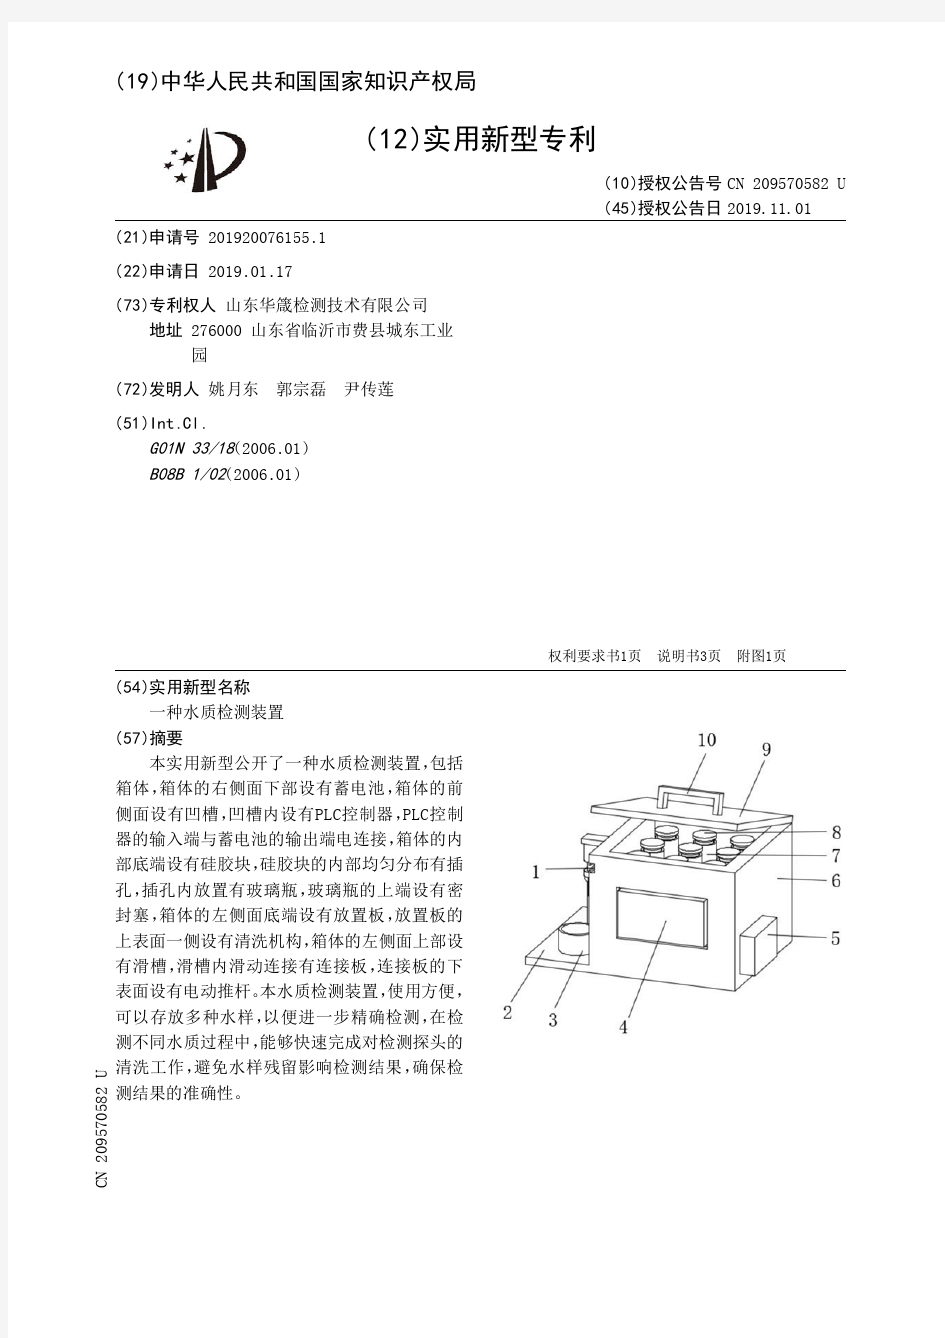 【CN209570582U】一种水质检测装置【专利】